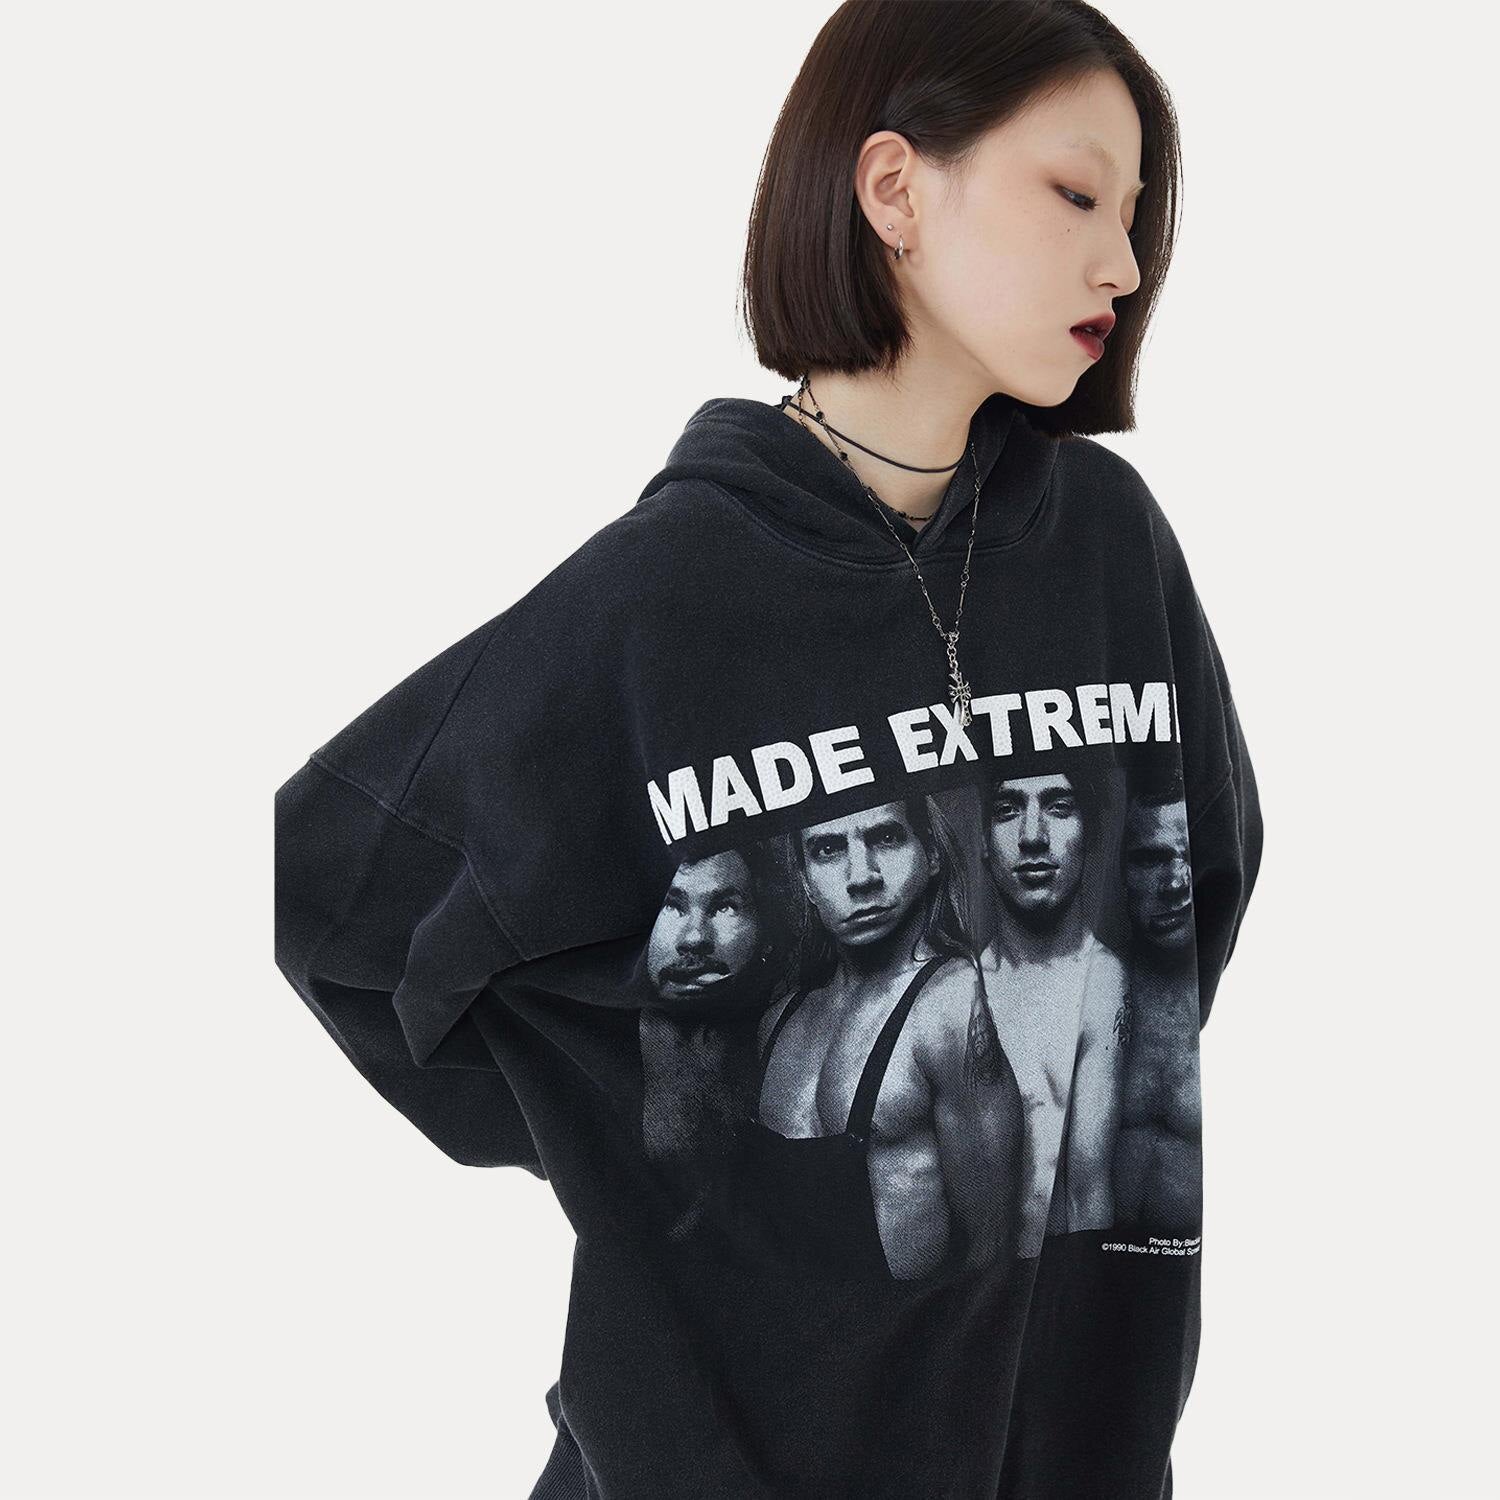 "Extreme Made" Unisex Men Women Streetwear Graphic Hoodie Daulet Apparel